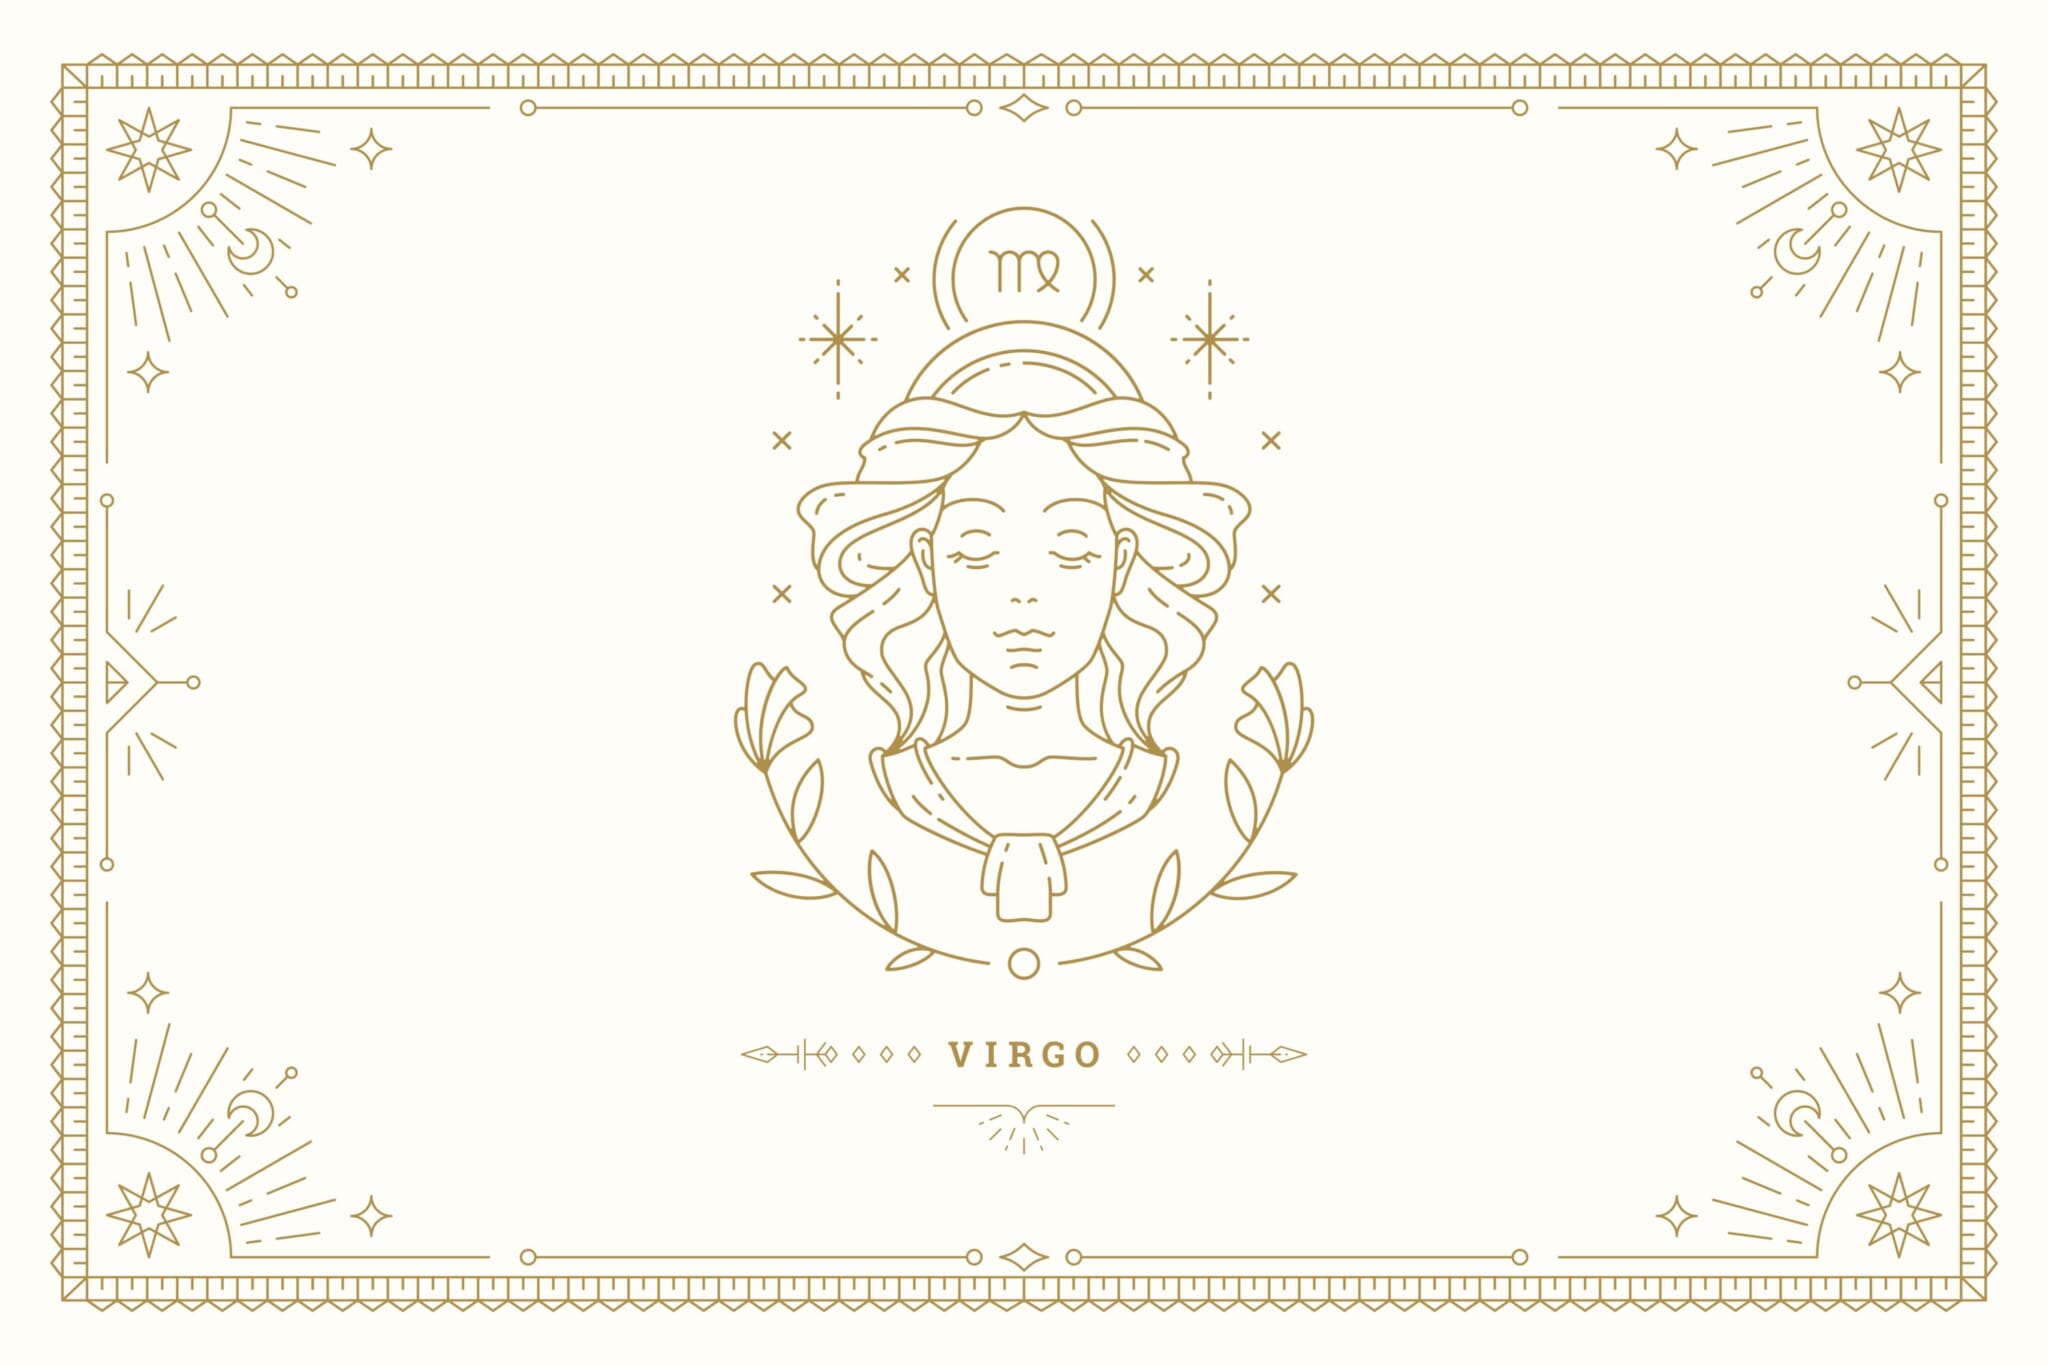 Virgo march horoscope 